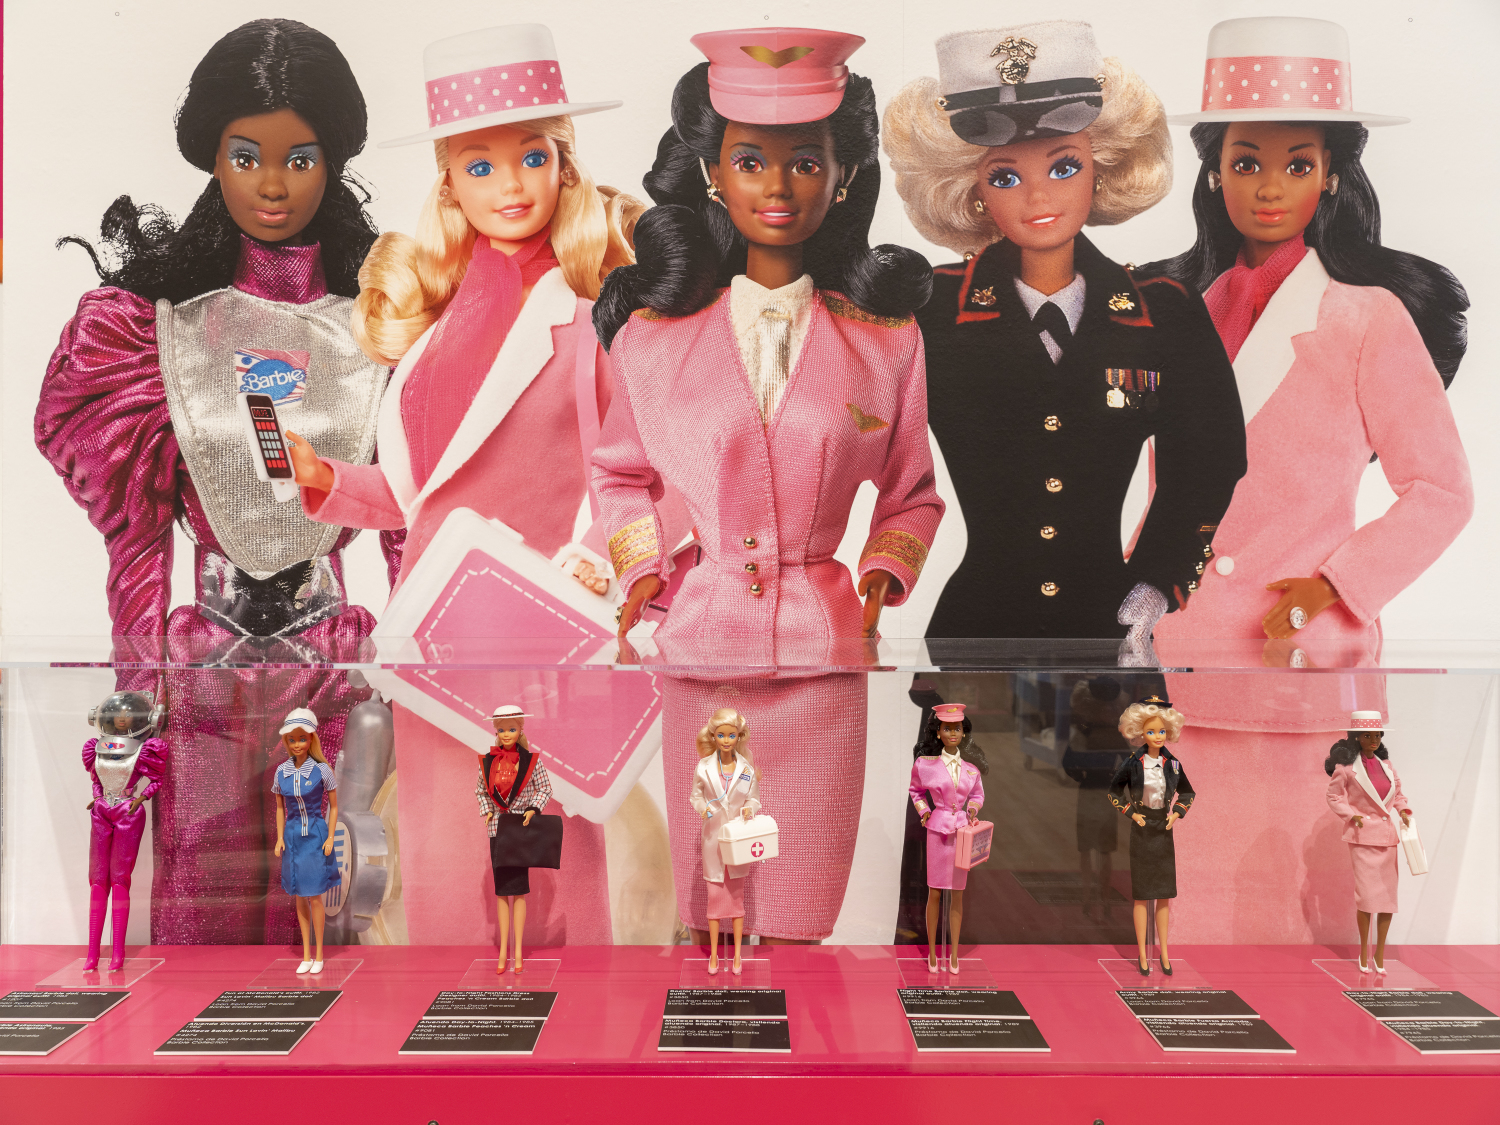 Barbie®: A Cultural Icon Exhibition